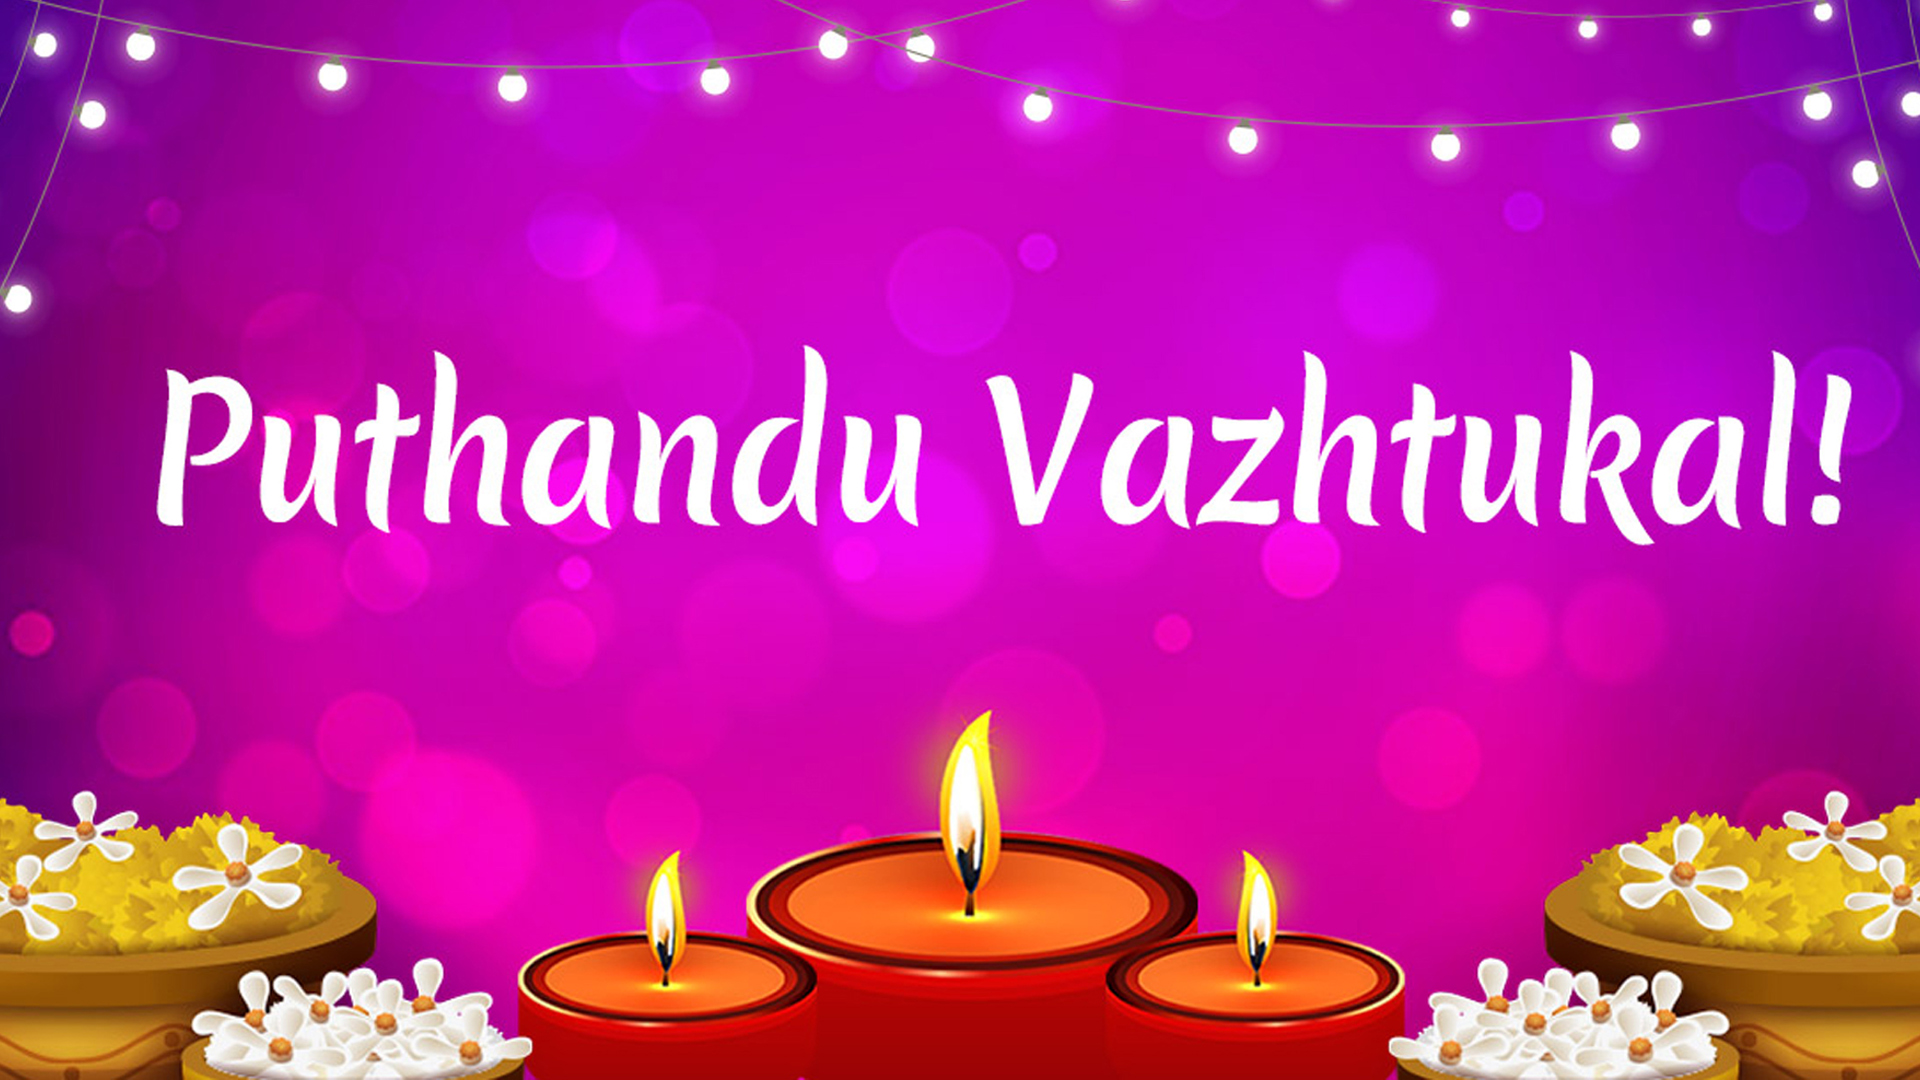 Puthandu Vazthukal Flowers Lights Purple Wallpaper 2K Happy Tamil New Year